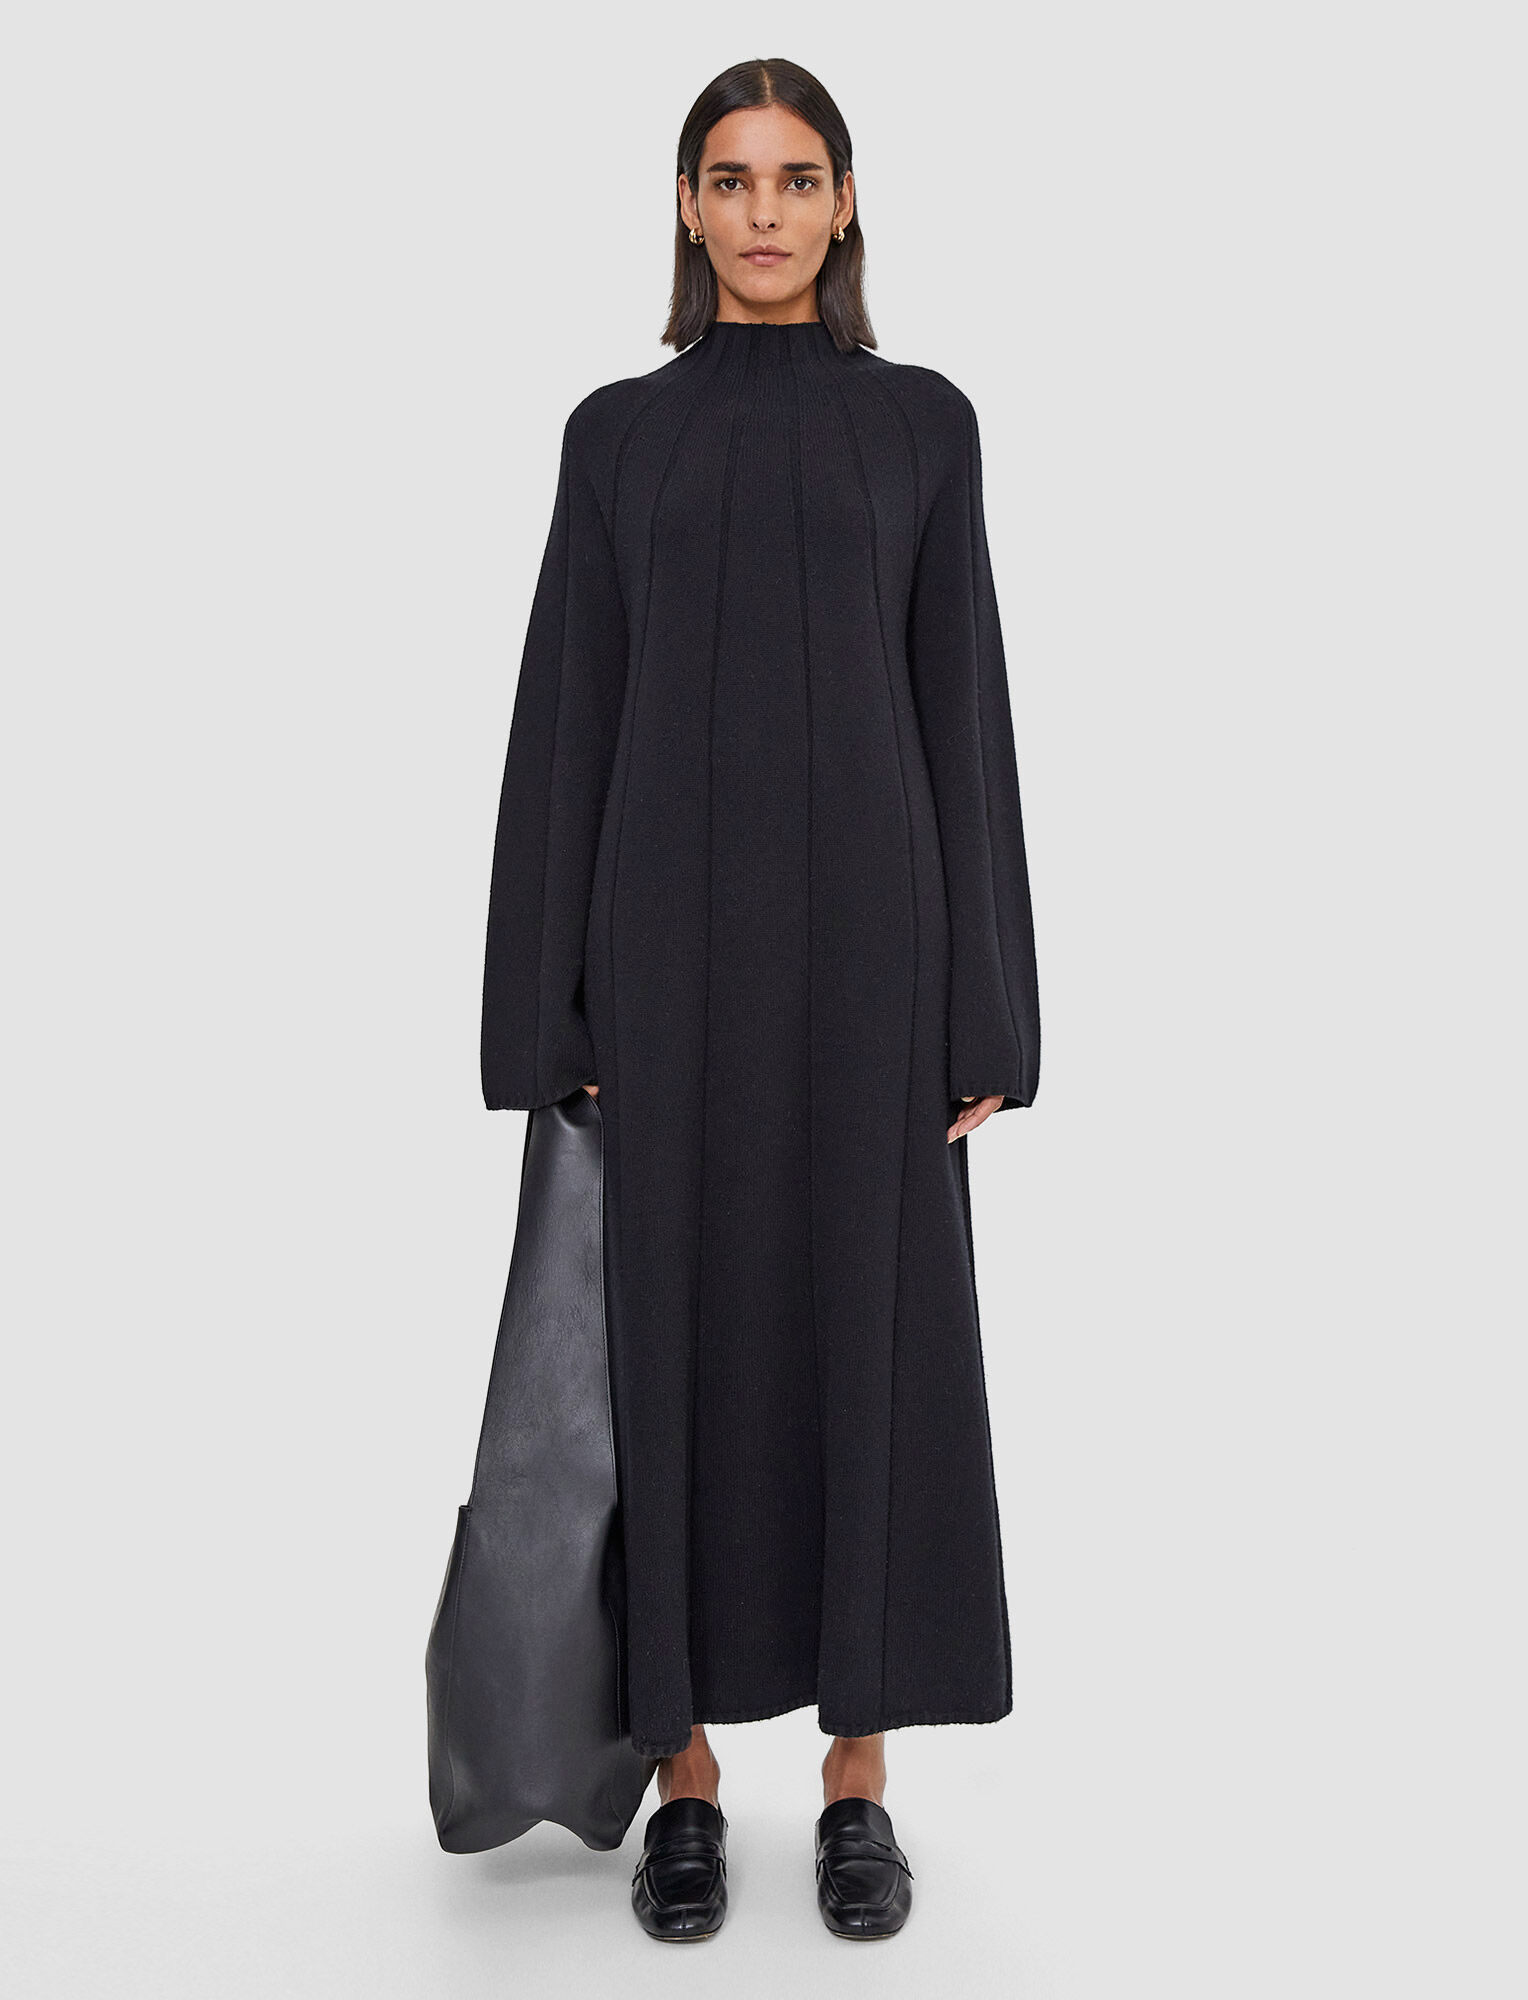 Alexander McQueen Asymmetric Pinstripe Wool Dress - Farfetch